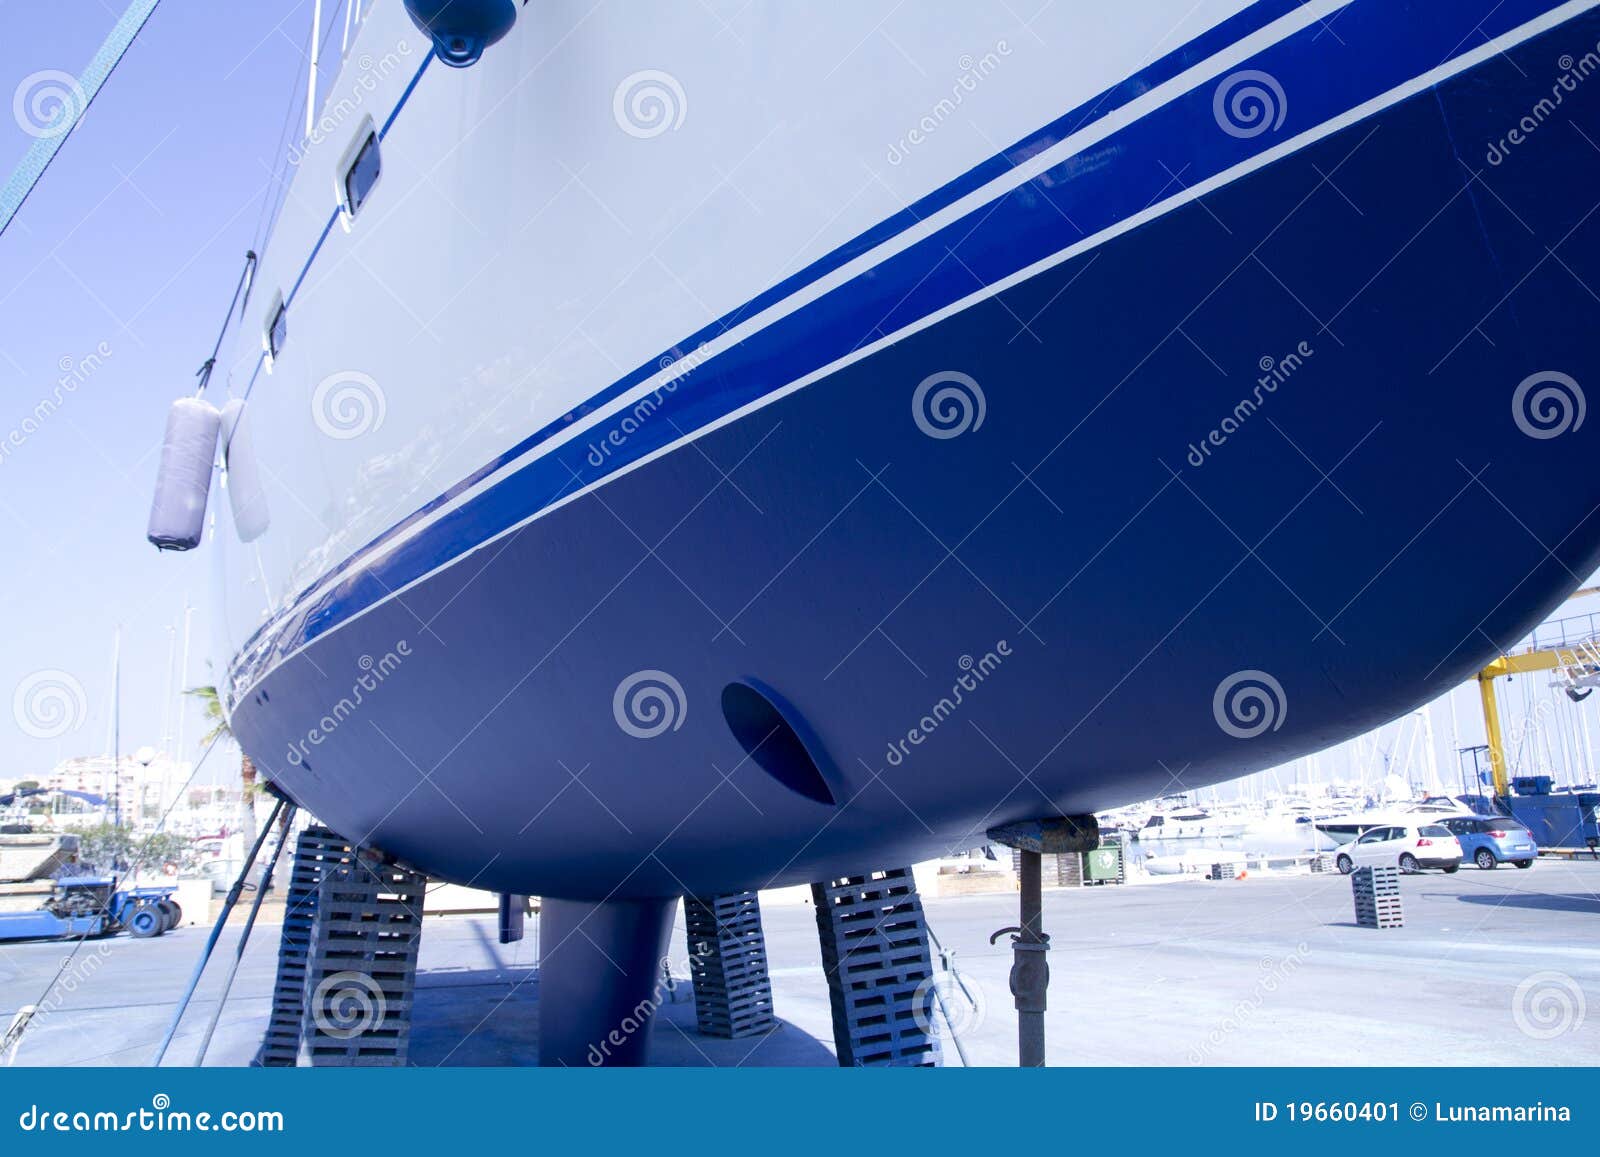 boat hull sailboat blue antifouling beached